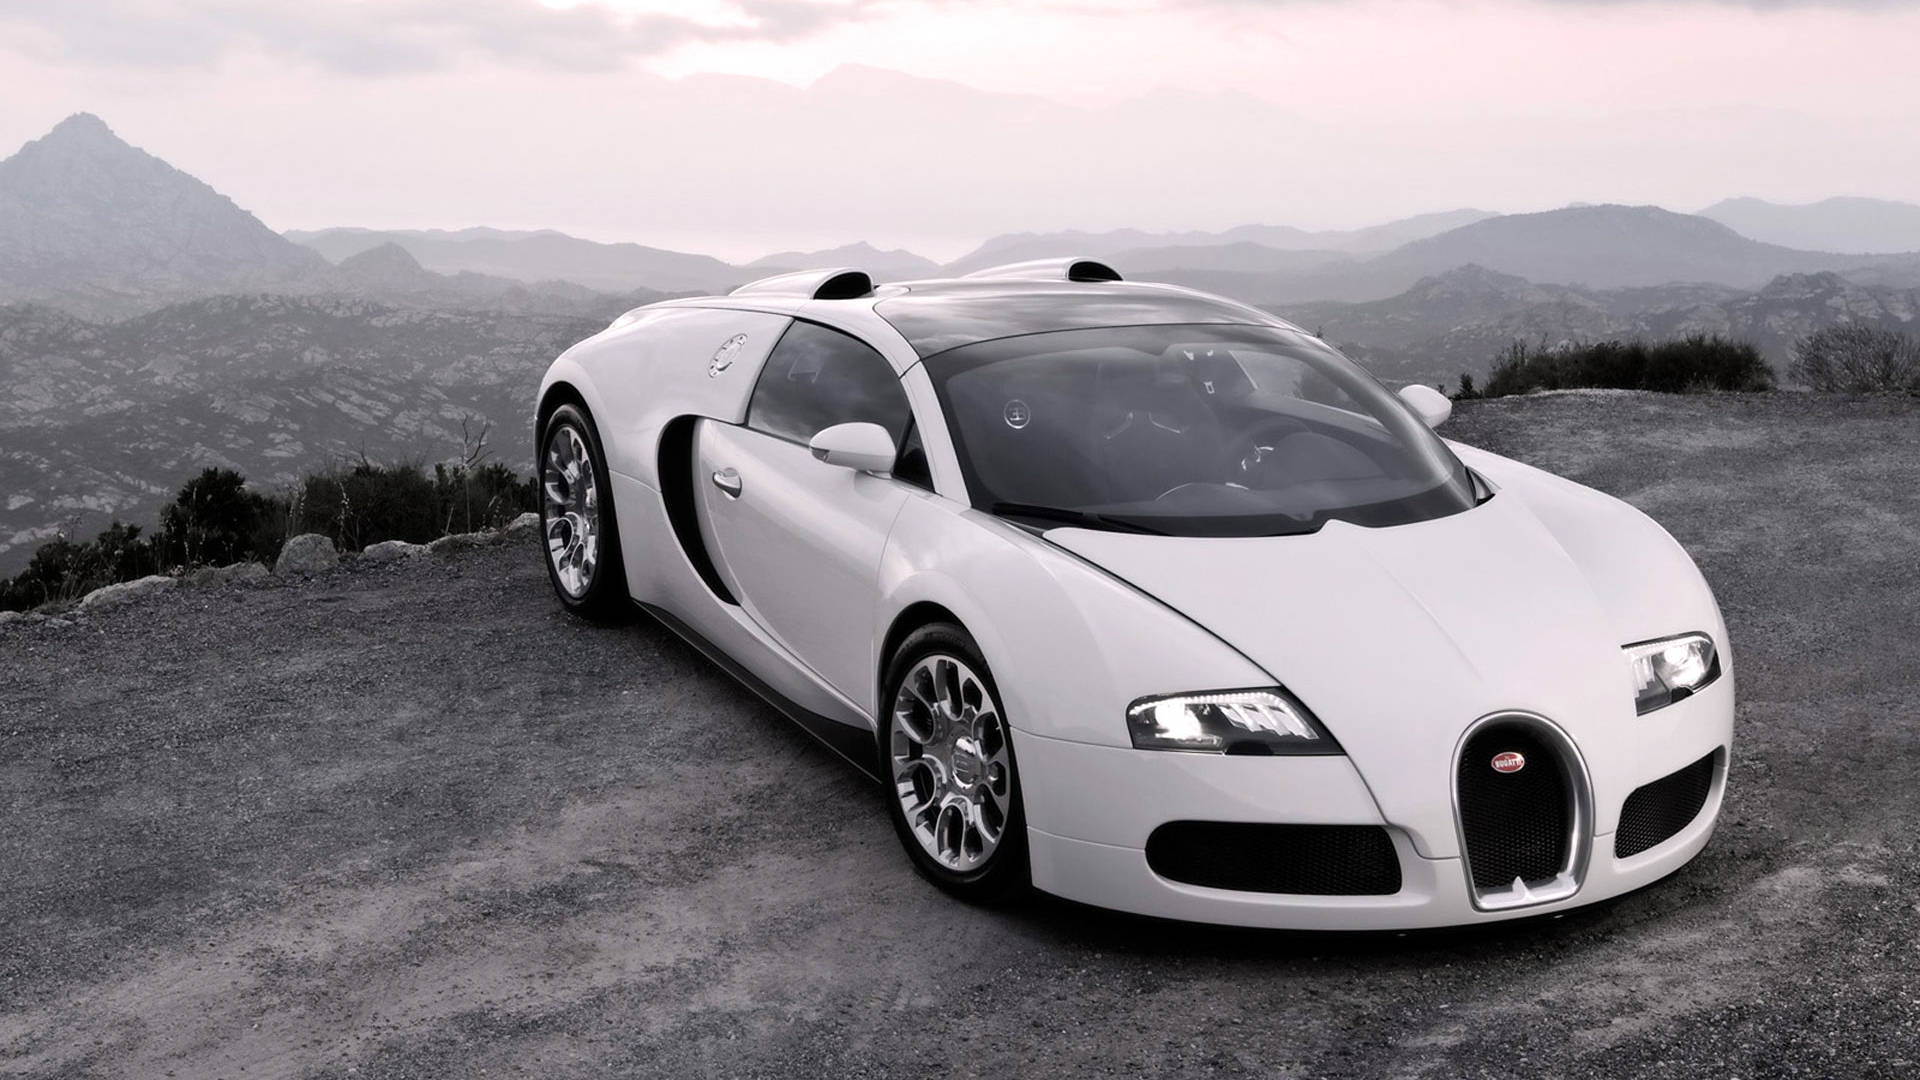 B&w Cool Bugatti Veyron Background